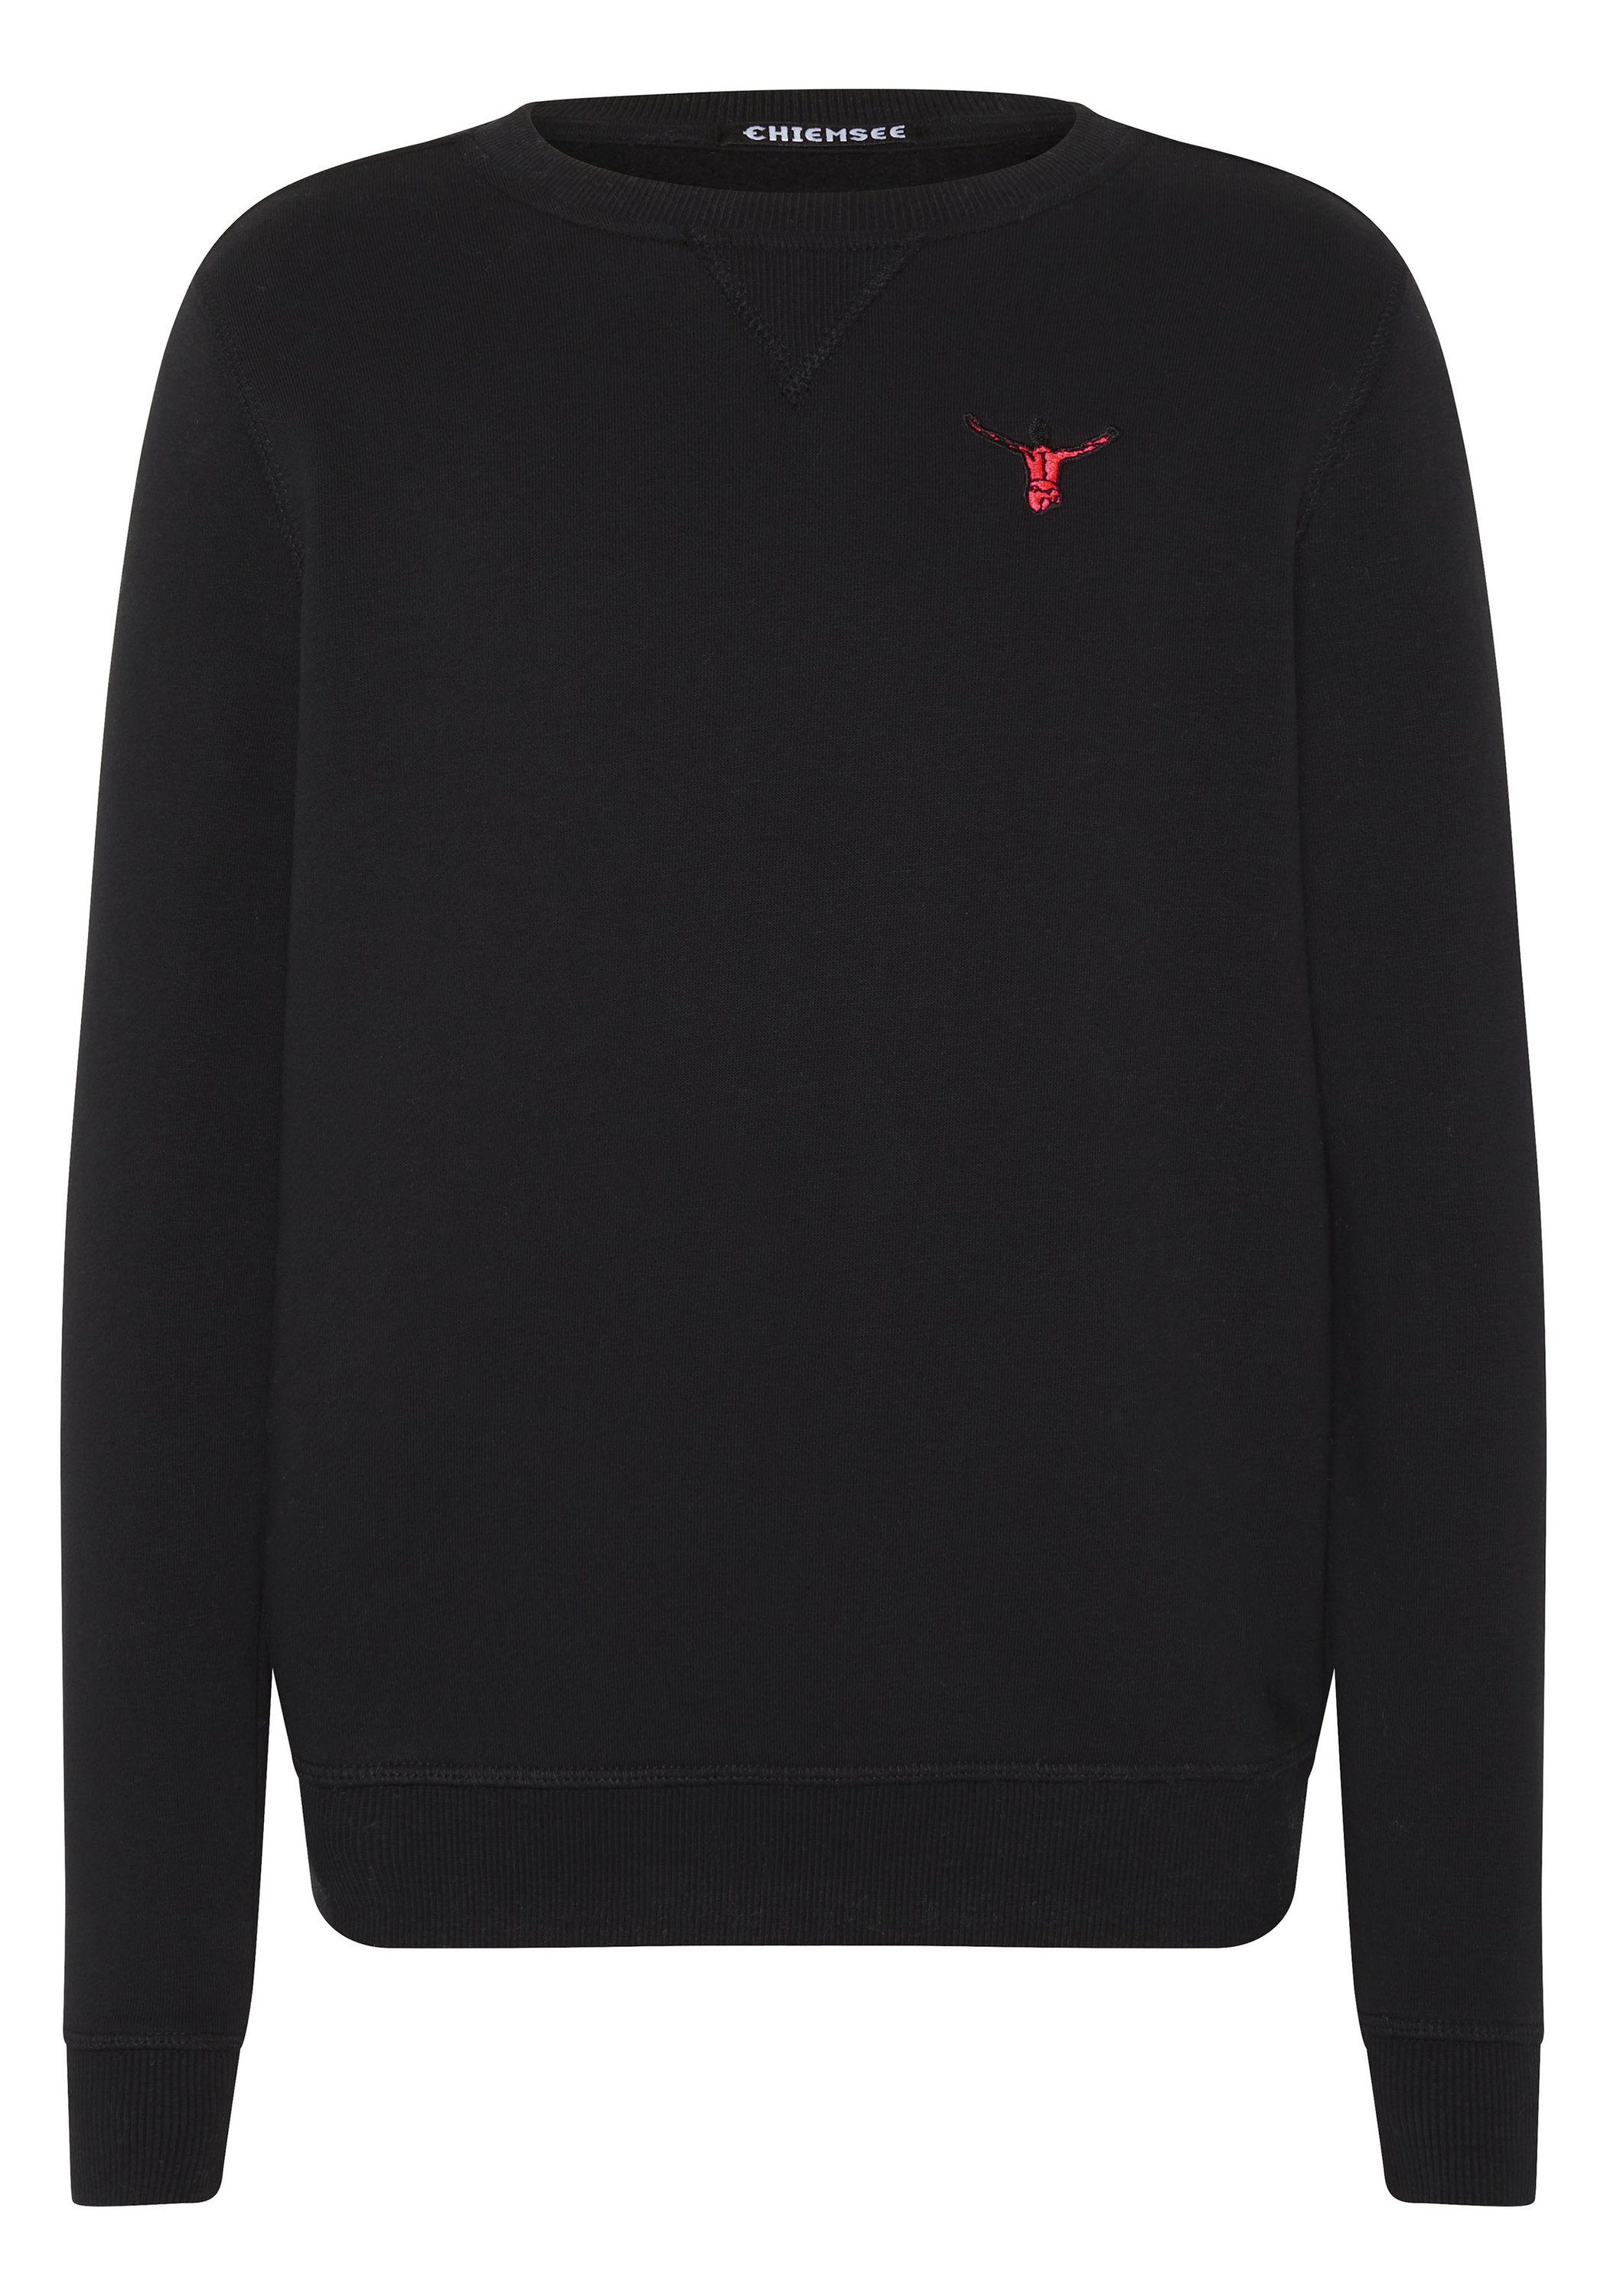 Chiemsee Sweatshirt Sweater mit Jumper-Print 1 19-3911 Deep Black